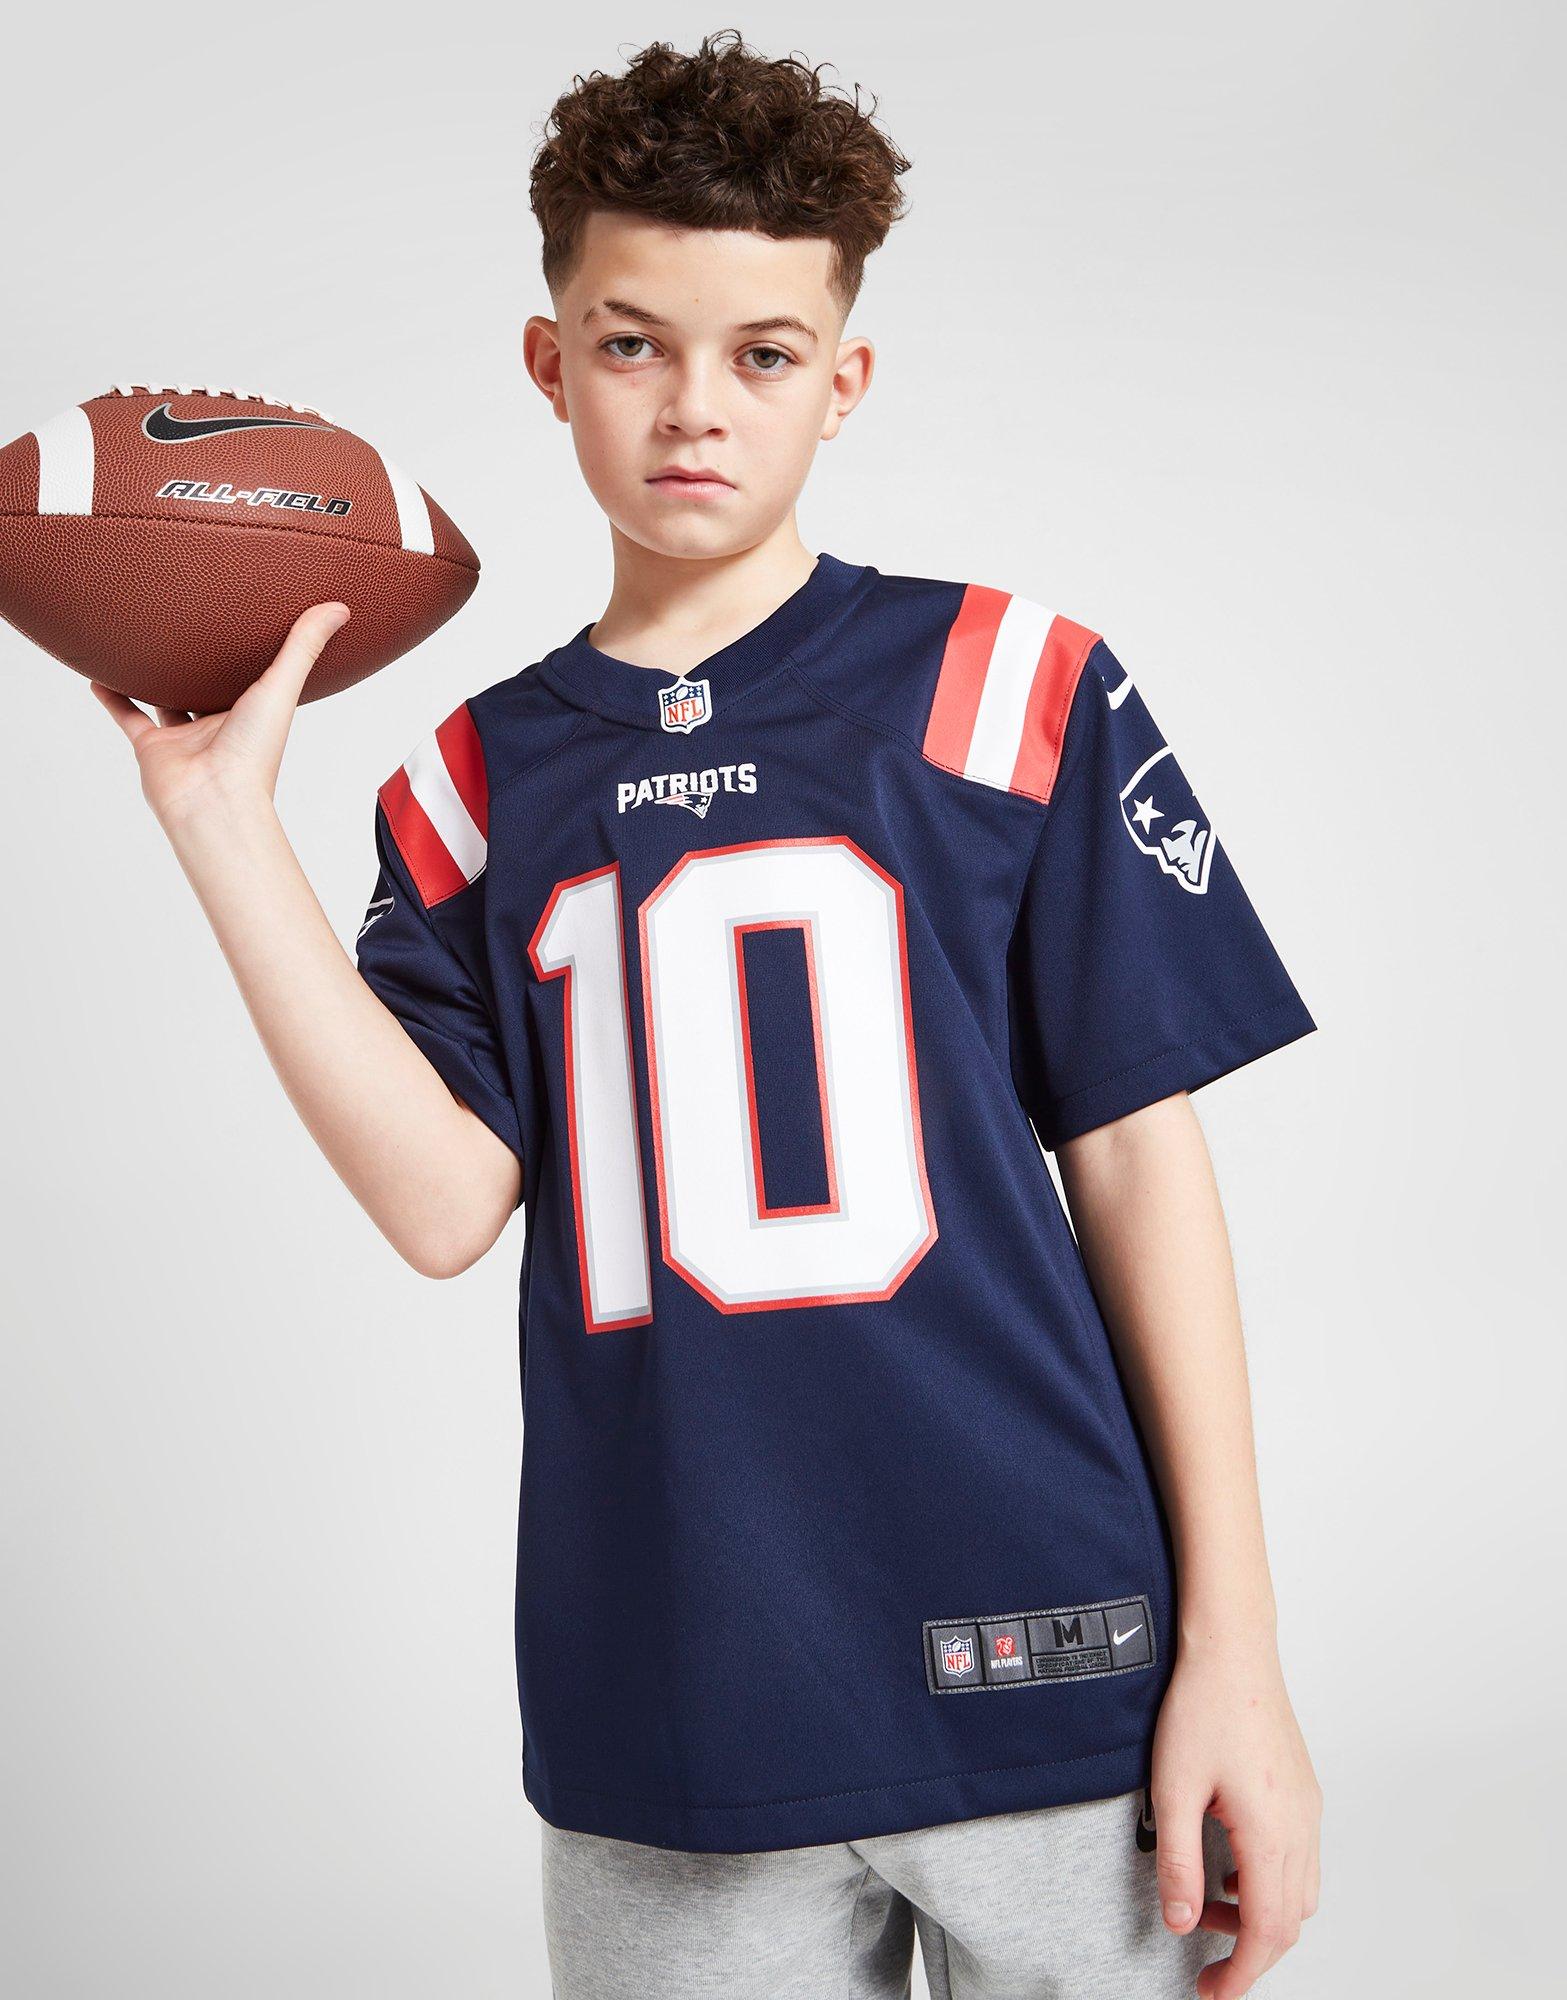 New England Patriots Kids Jerseys, Patriots Youth Apparel, Kids Clothing